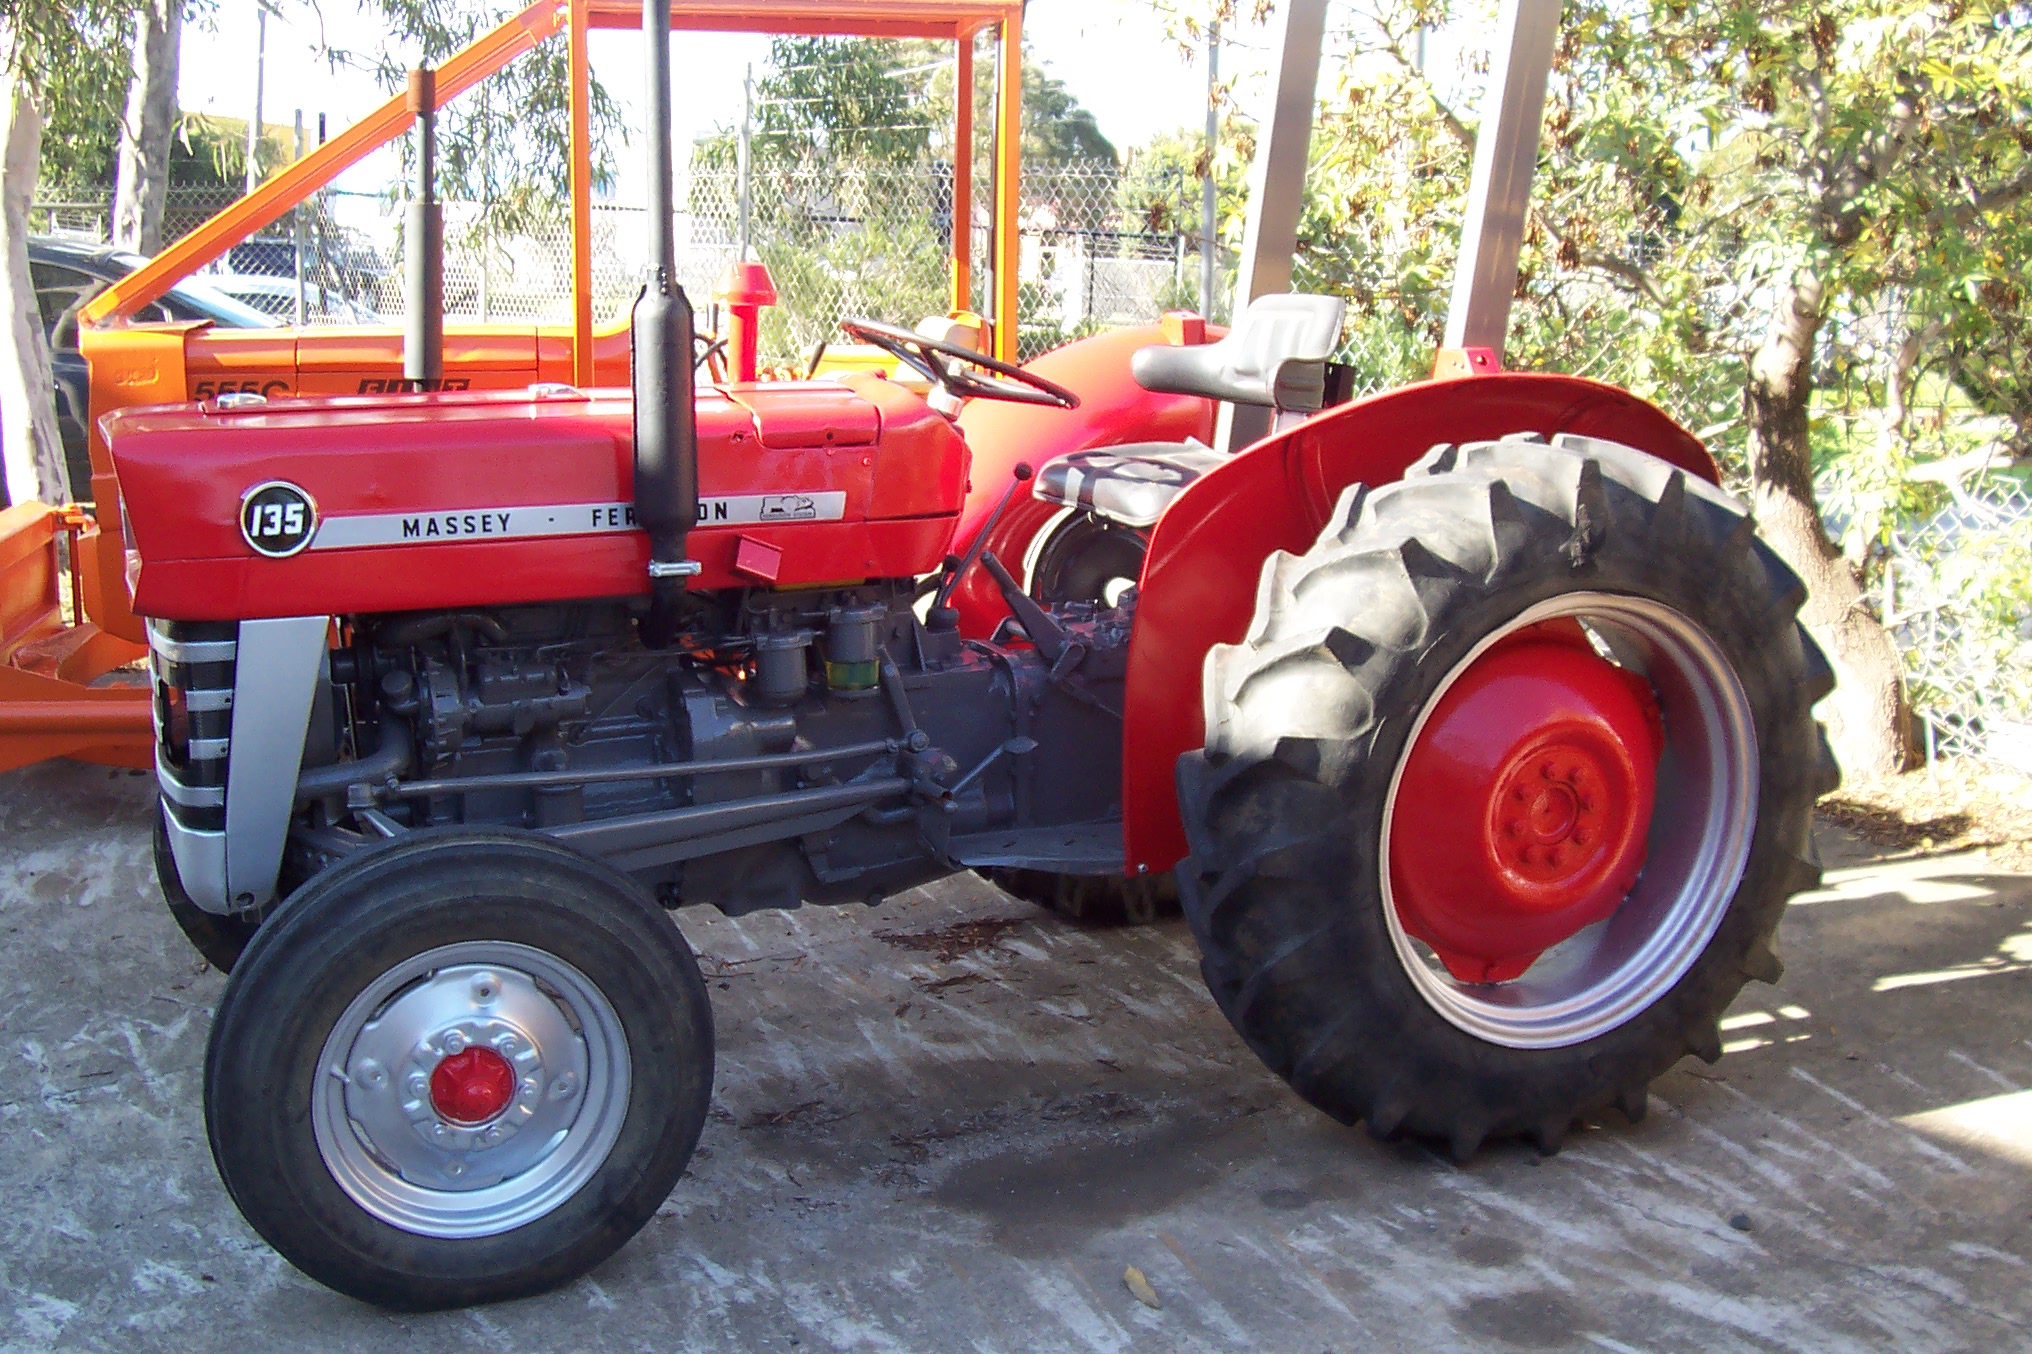 Used Machinery - Massey Ferguson 135 Tractor